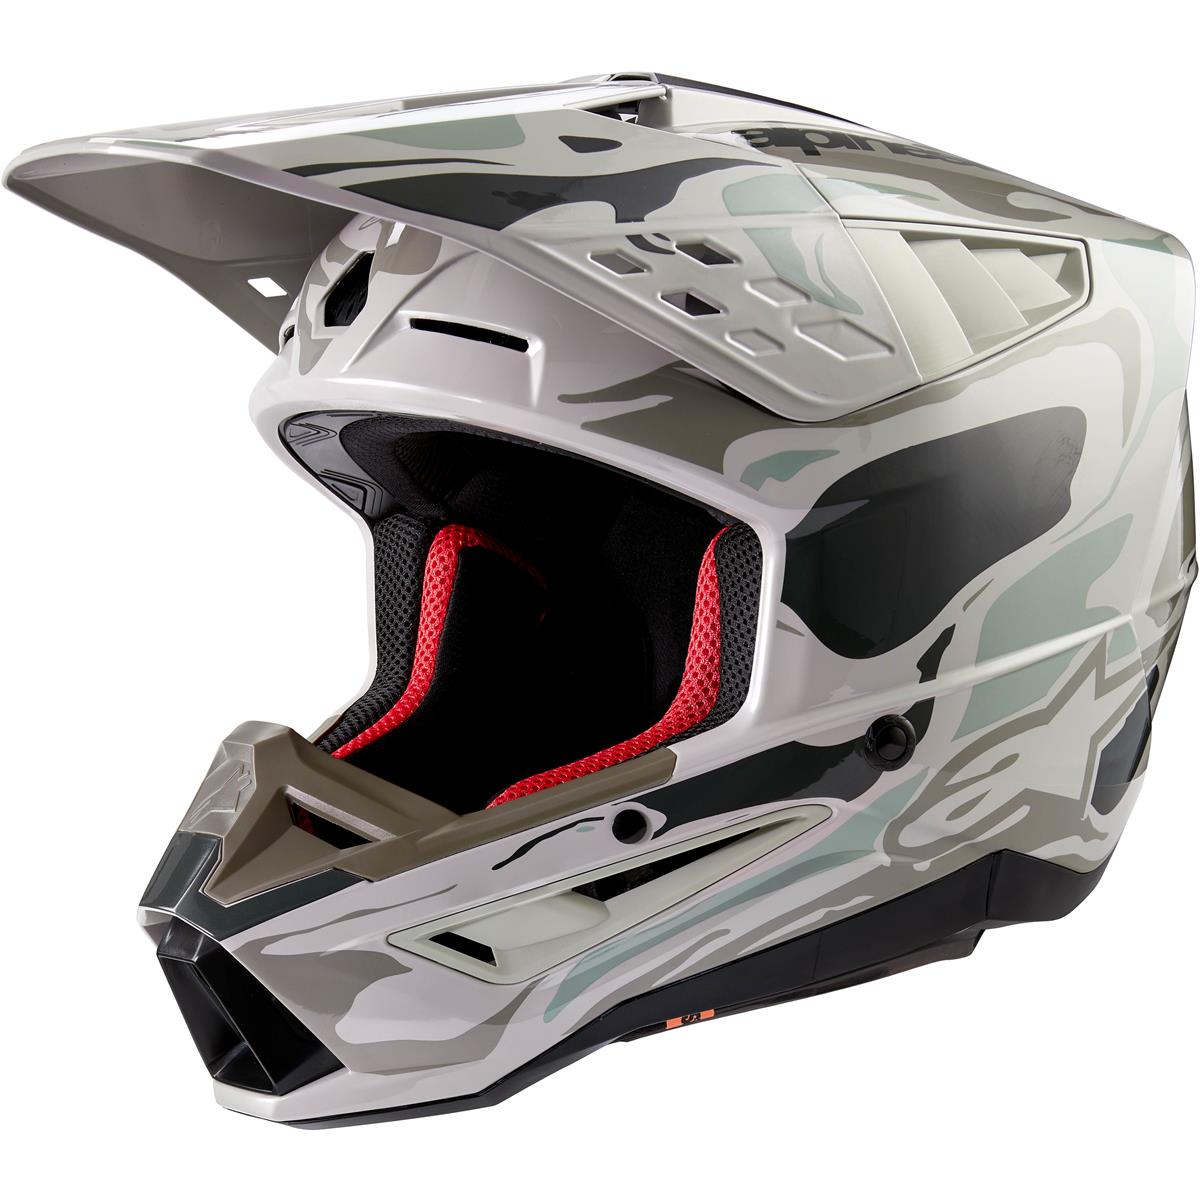 Alpinestars Motocross-Helm S-M5 Mineral - Warm Grau/Celadon Grün/Glossy